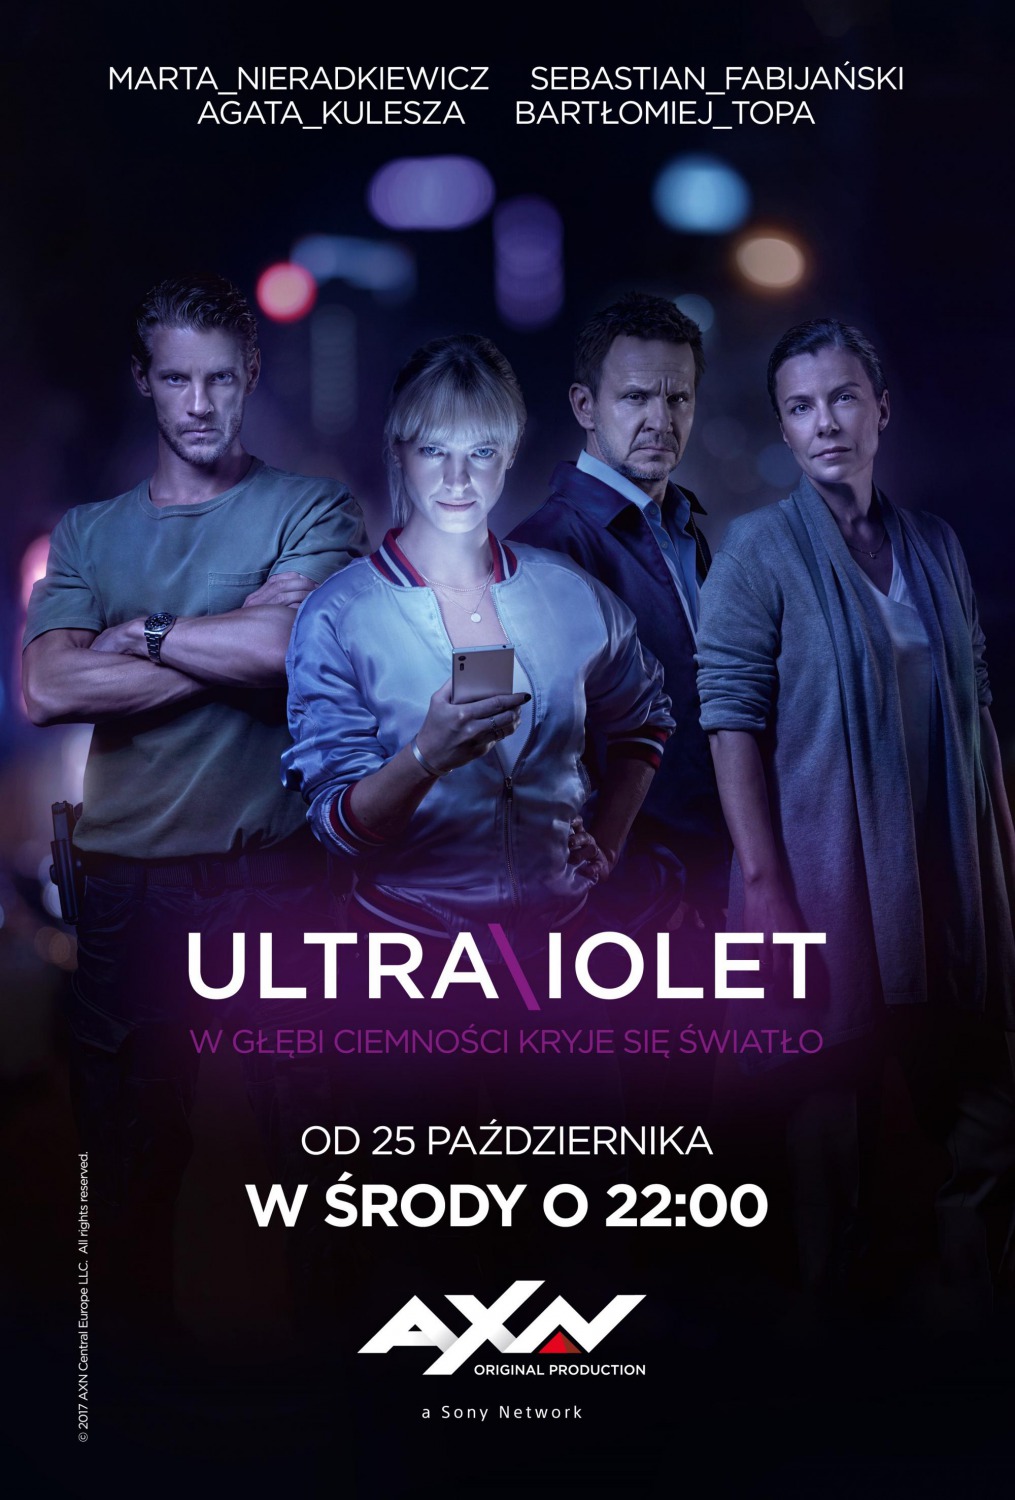 Extra Large TV Poster Image for Ultraviolet 